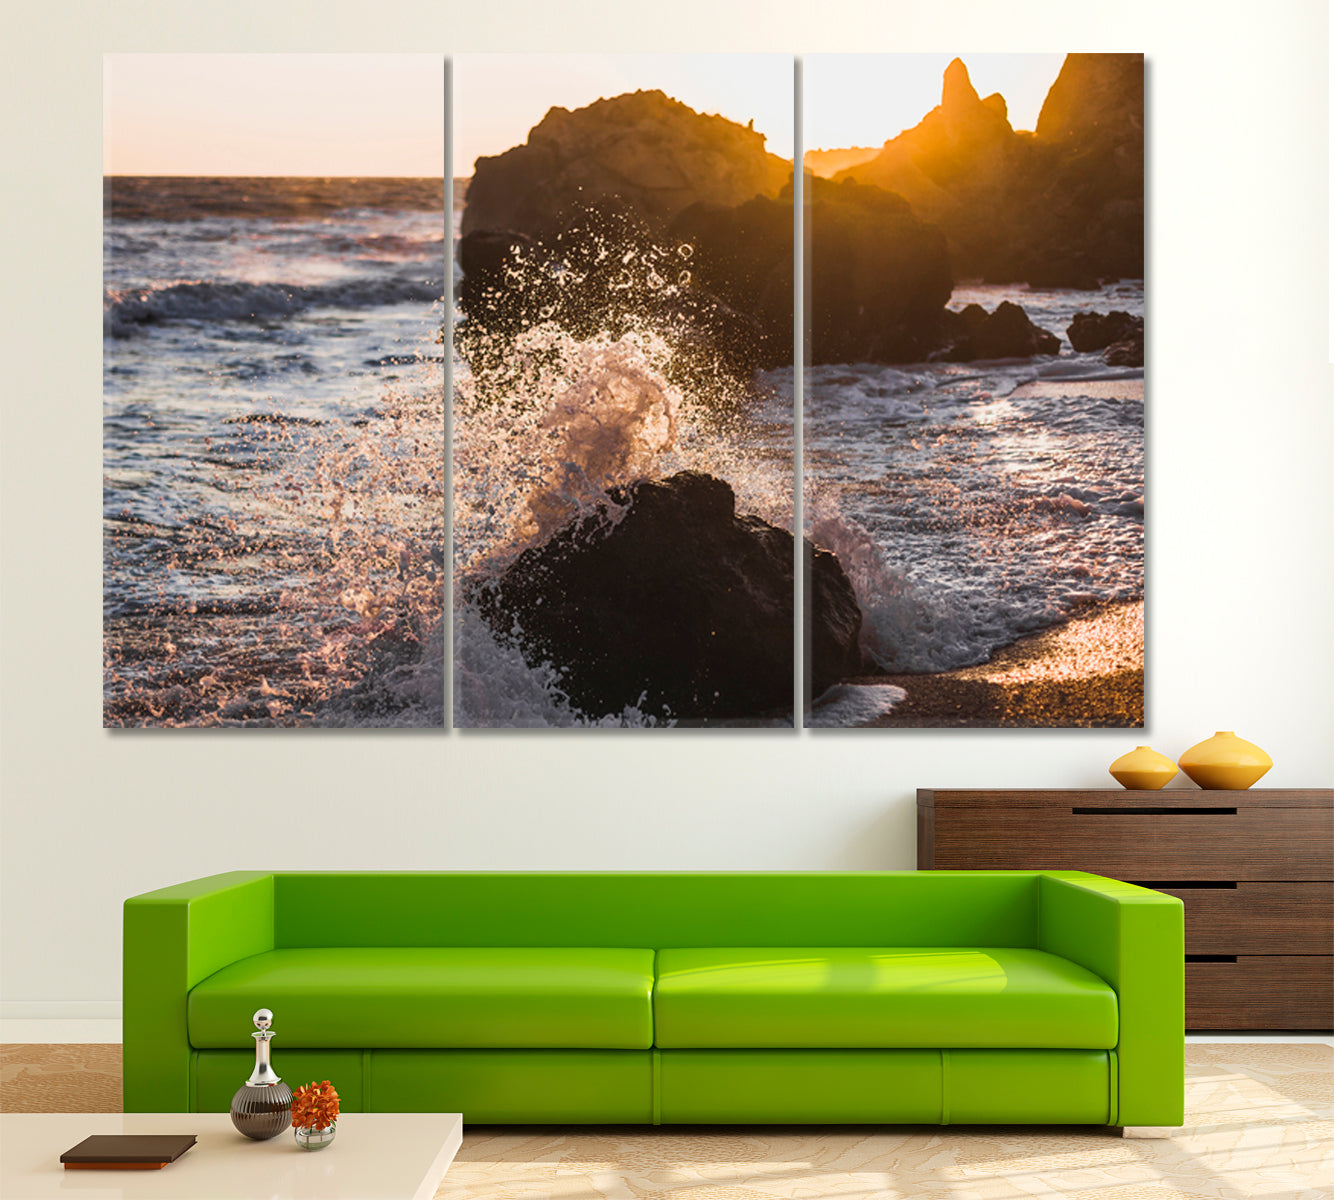 Waves Crashing on Rocks Sunlight Sea Marina Scenery Seascape Nature Wall Canvas Print Artesty 3 panels 36" x 24" 